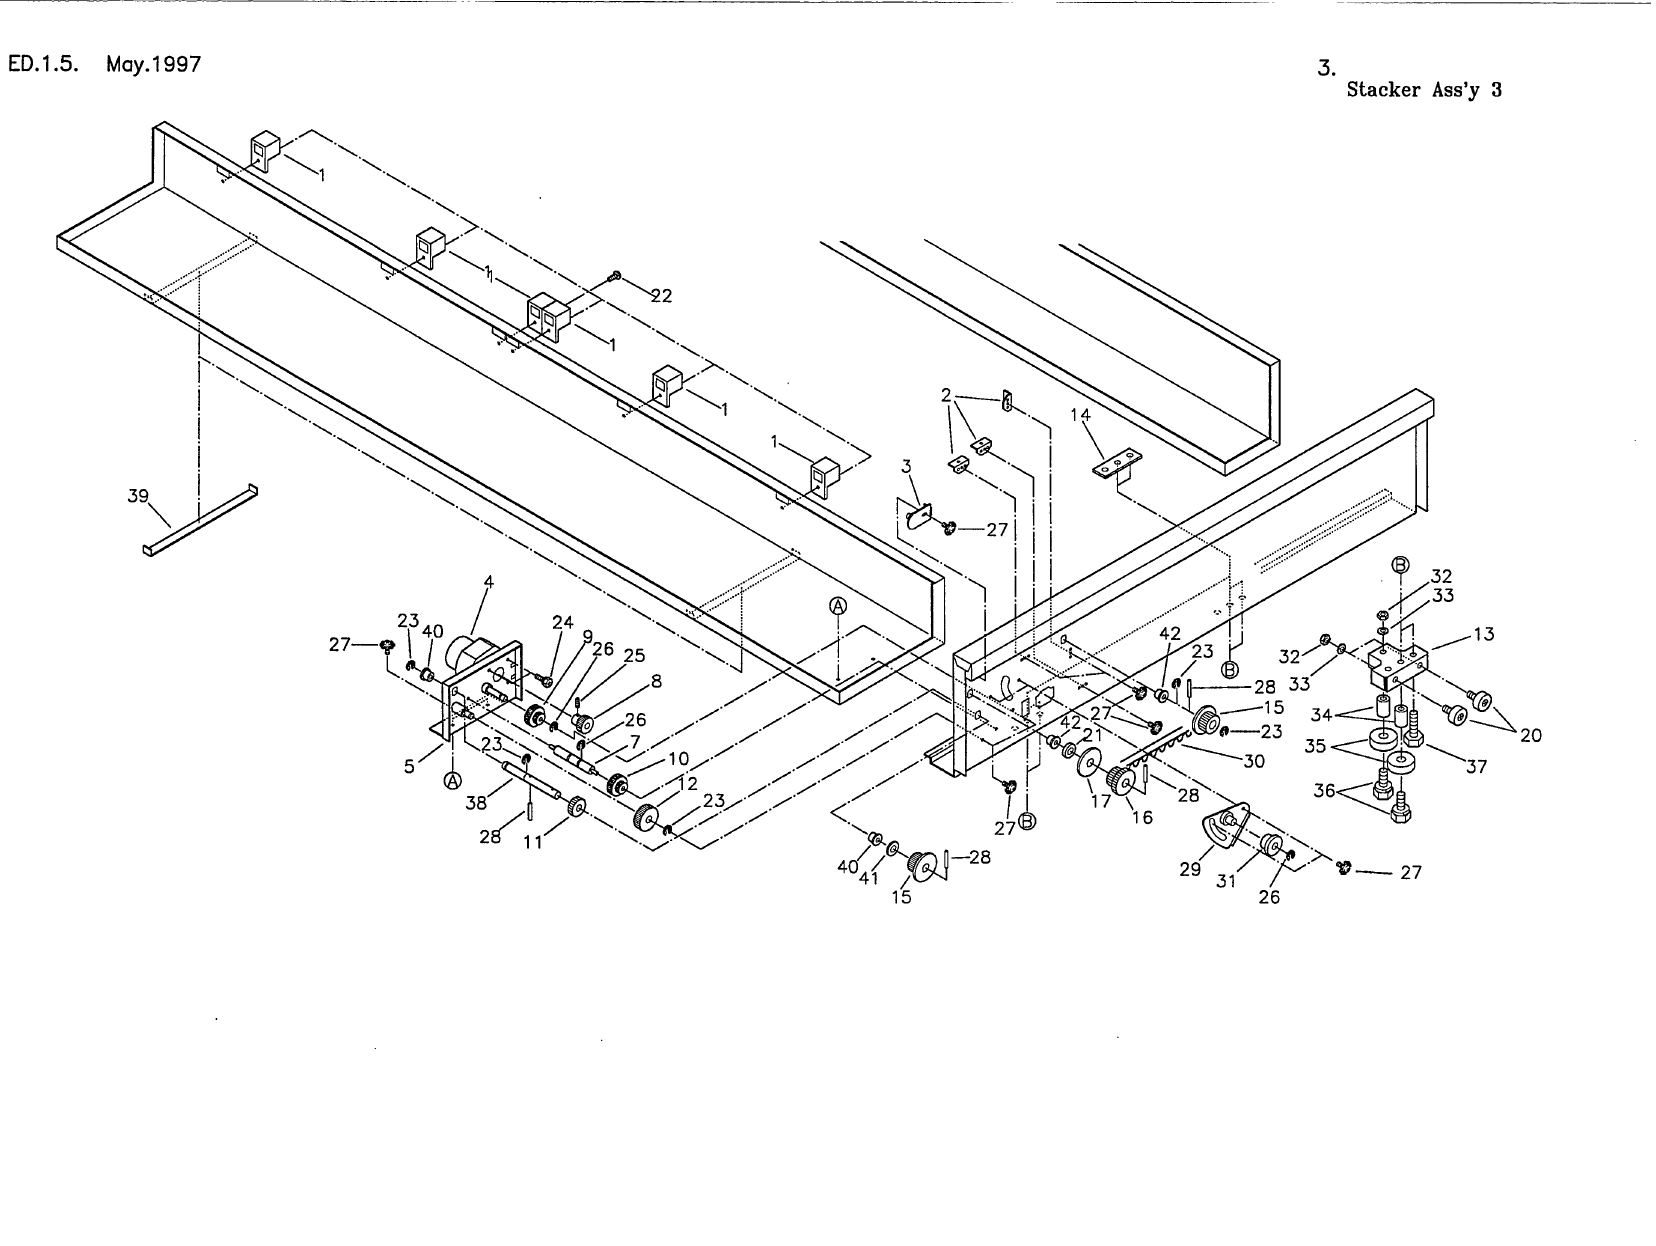 KIP 1200 K-54 Auto-Stacker Parts and Service Manual-6